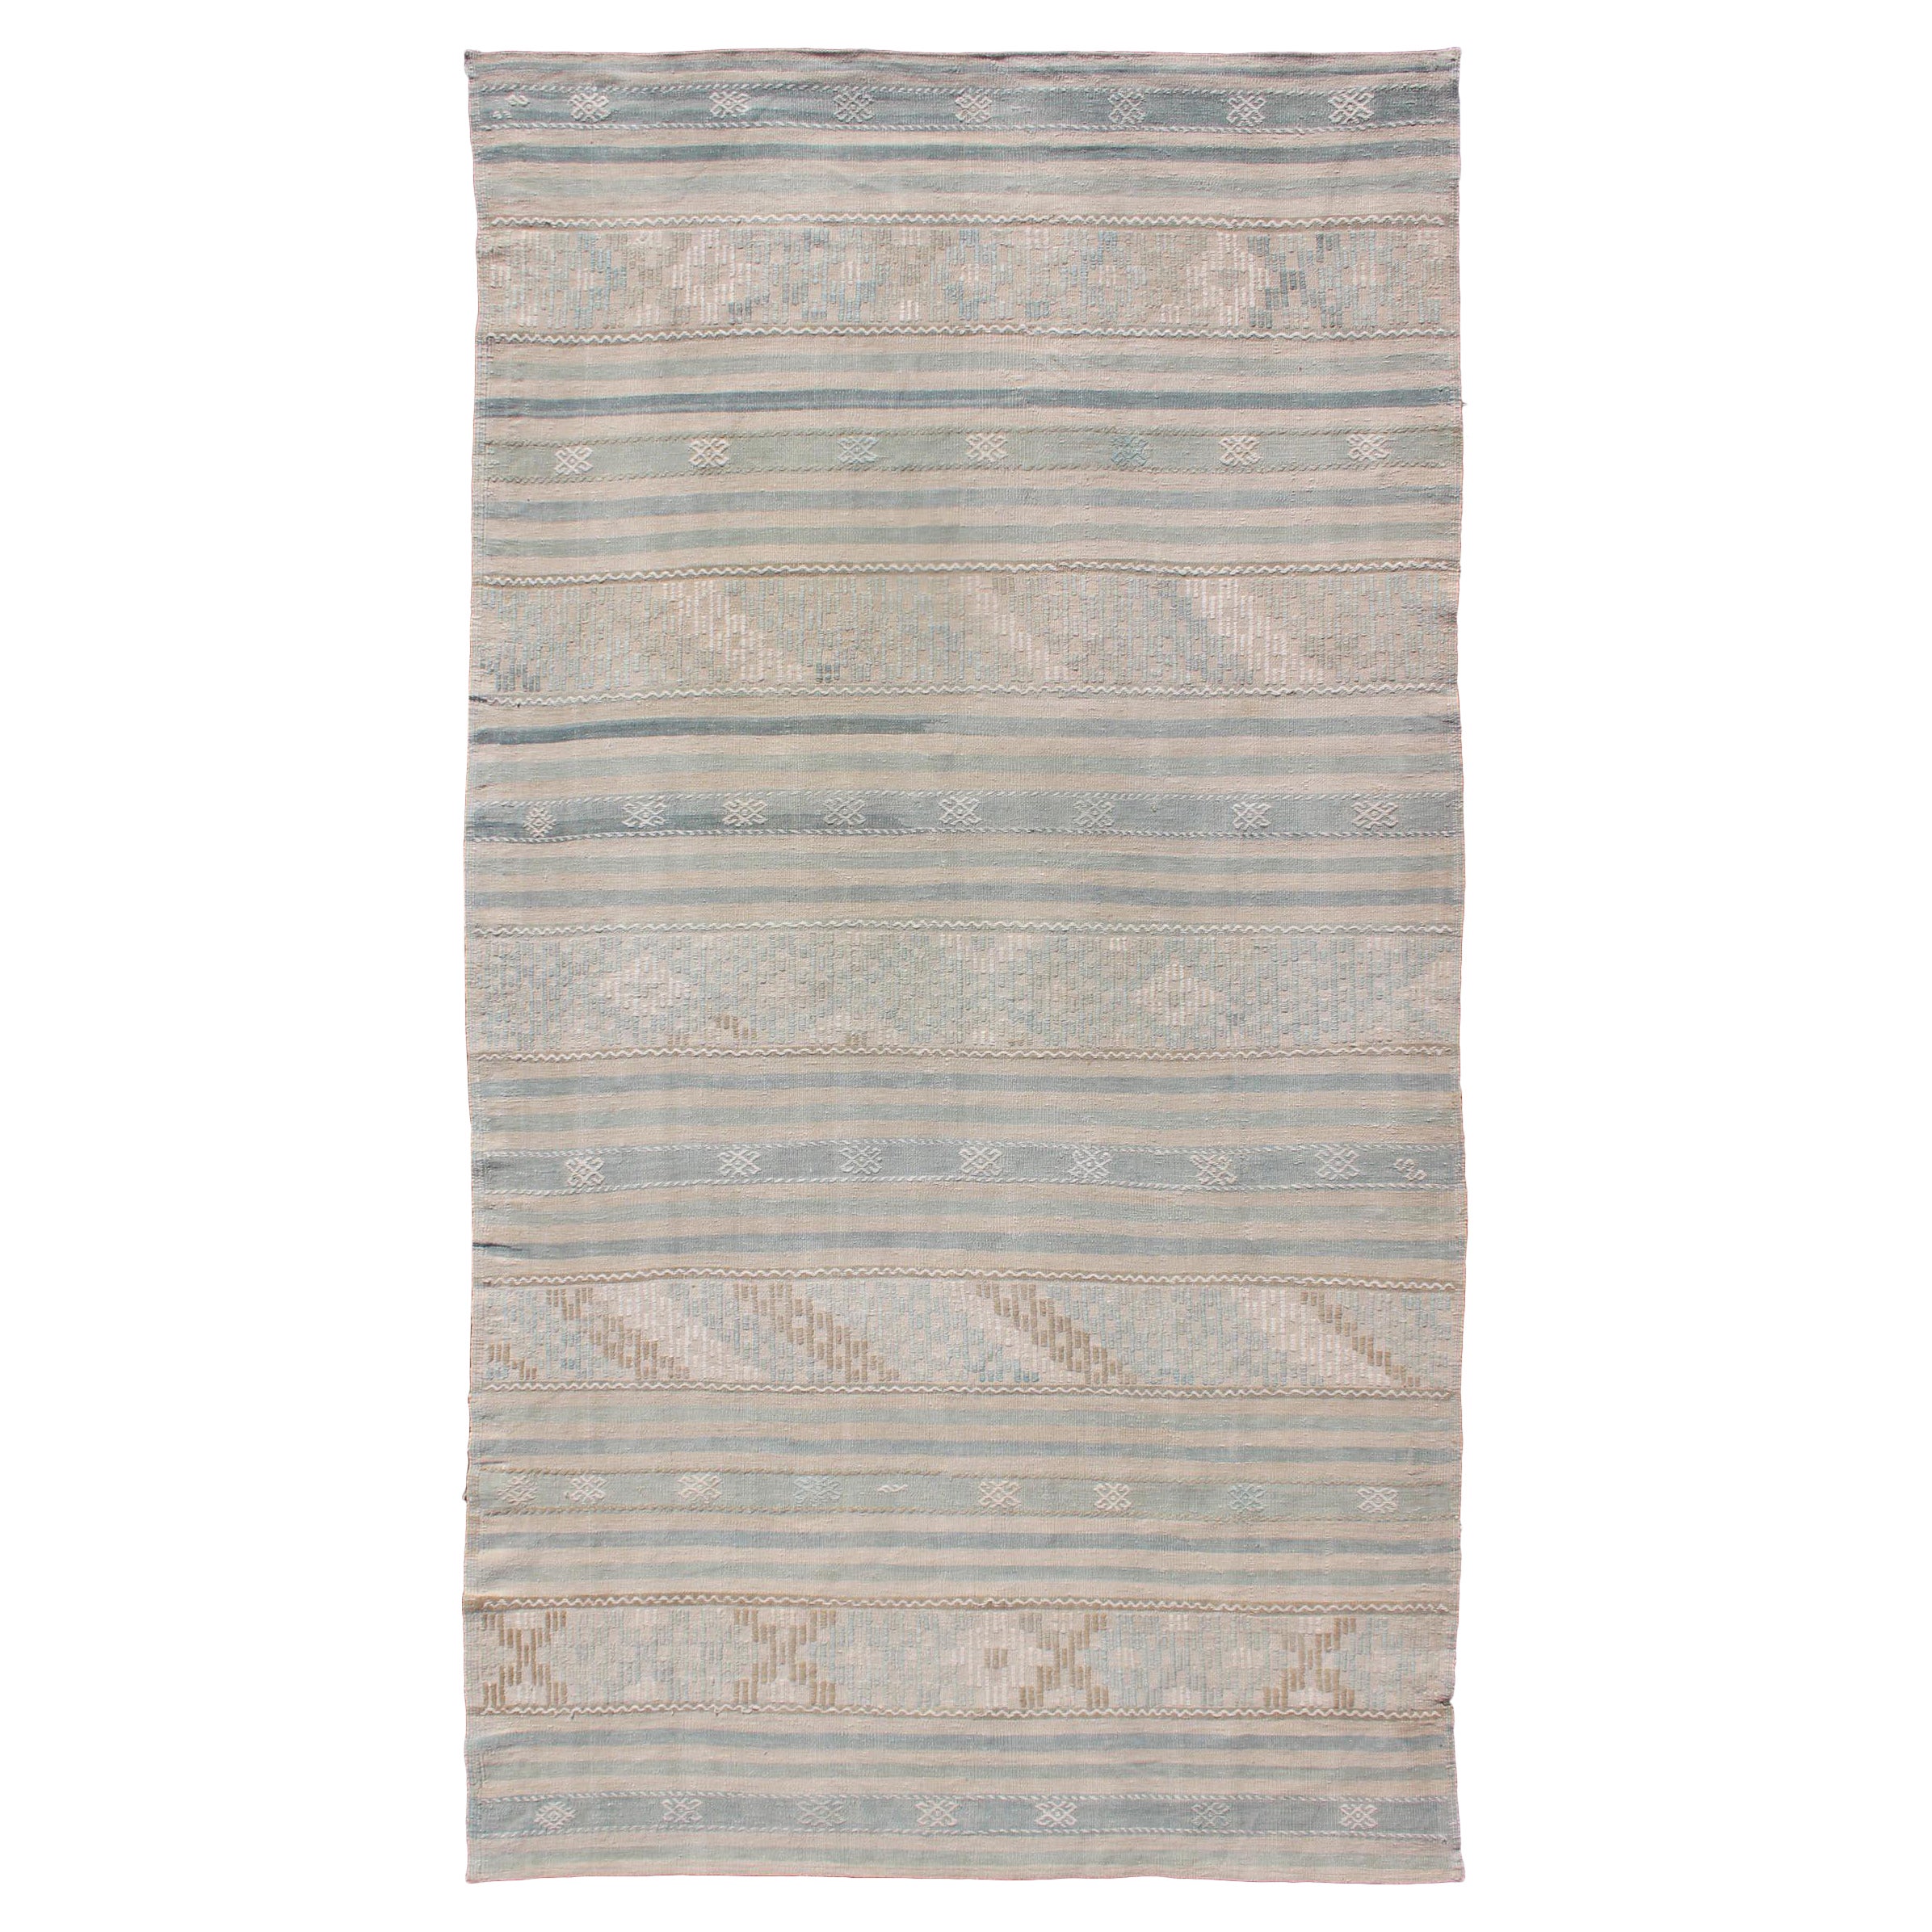 Natural-Toned Turkish Flat-Weave Kilim with Geometric Stripes Tan and Seafoam